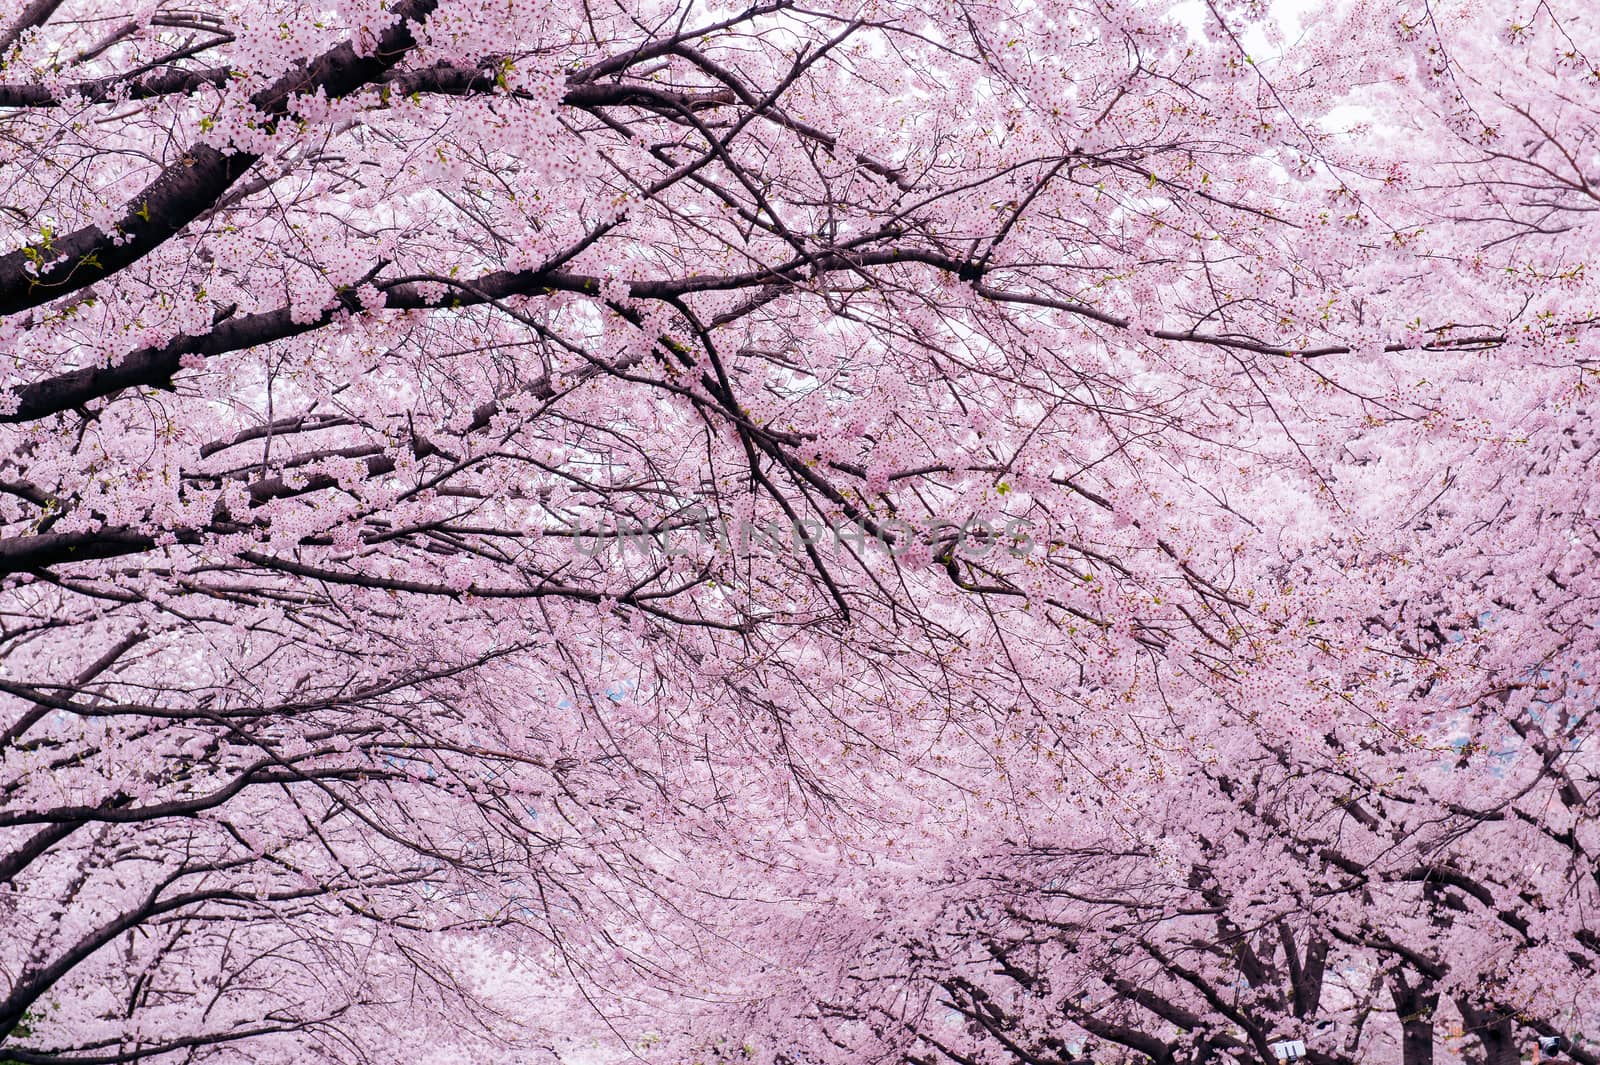 Cherry Blossom with Soft focus, Sakura season in korea,Background